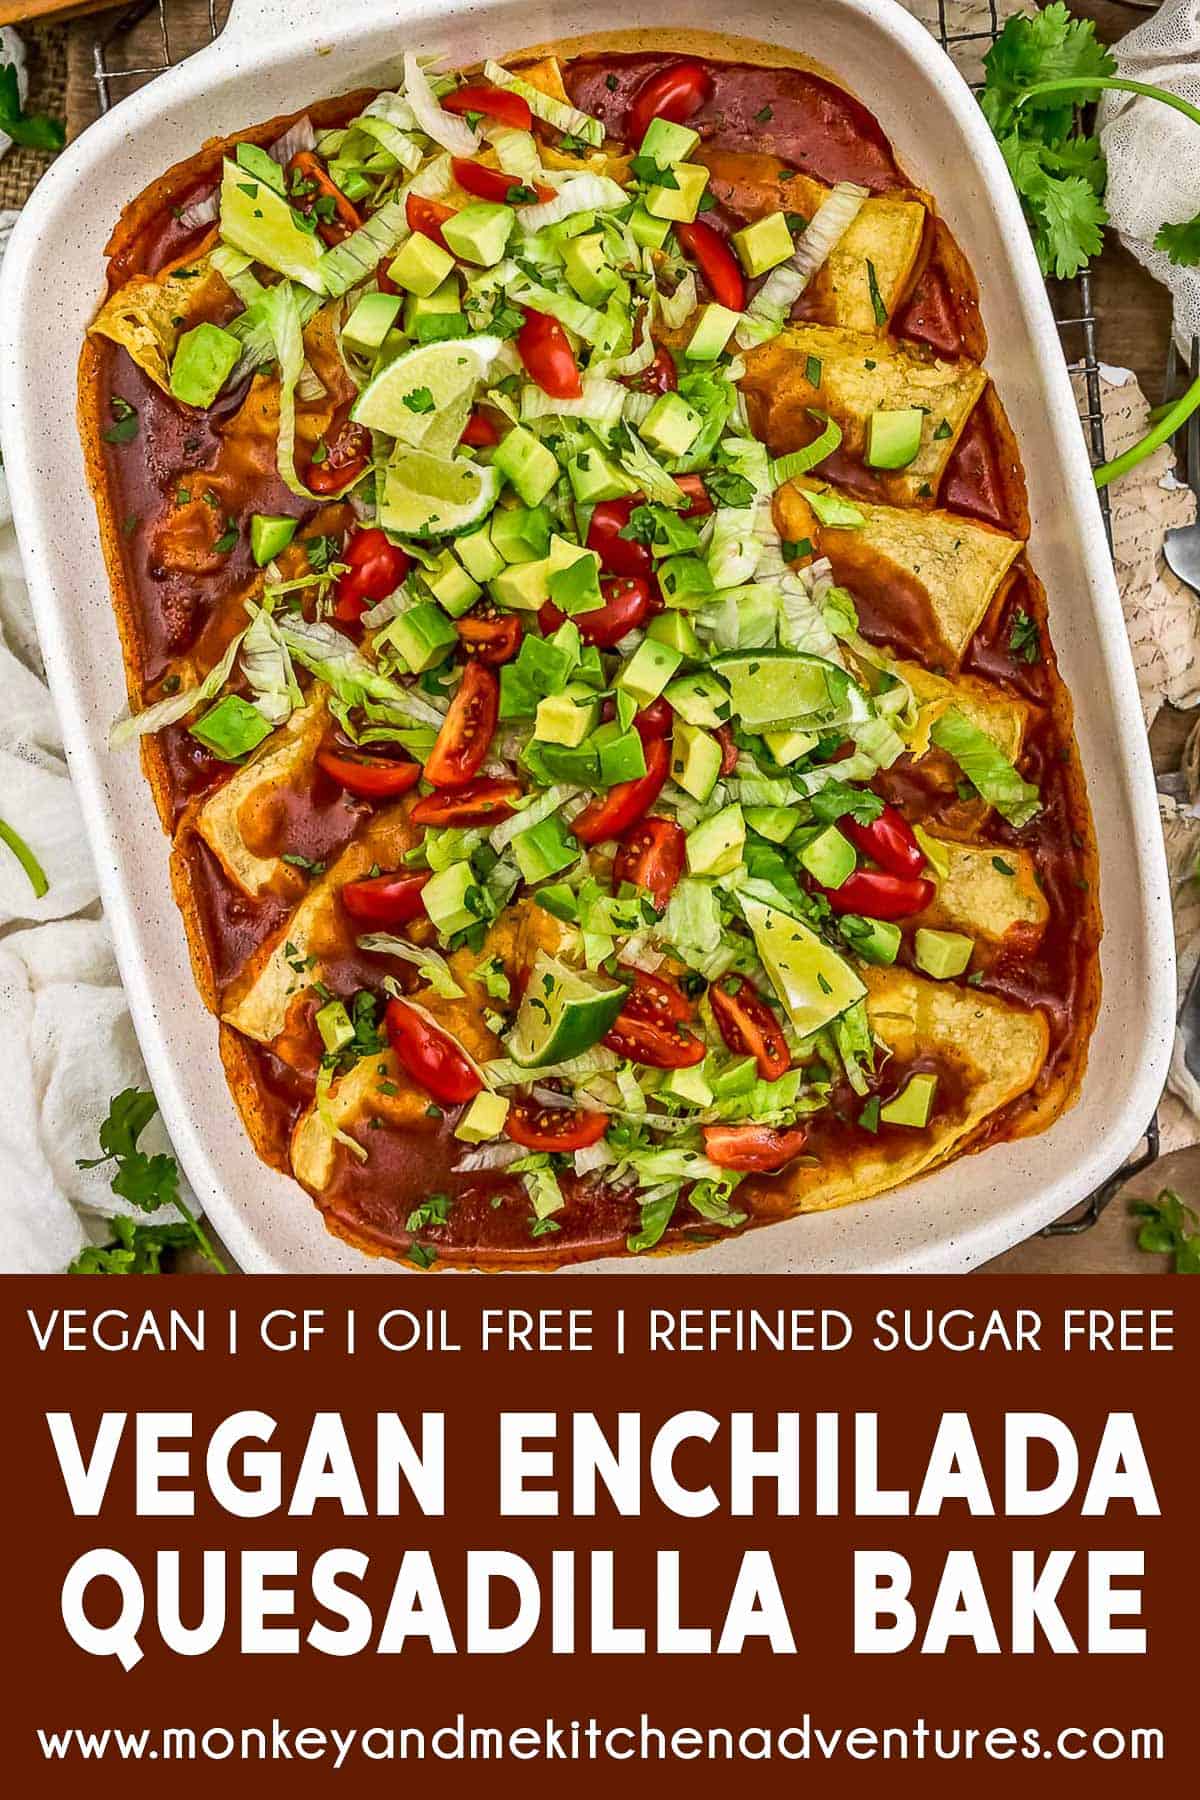 Vegan Enchilada Quesadilla Bake with text description